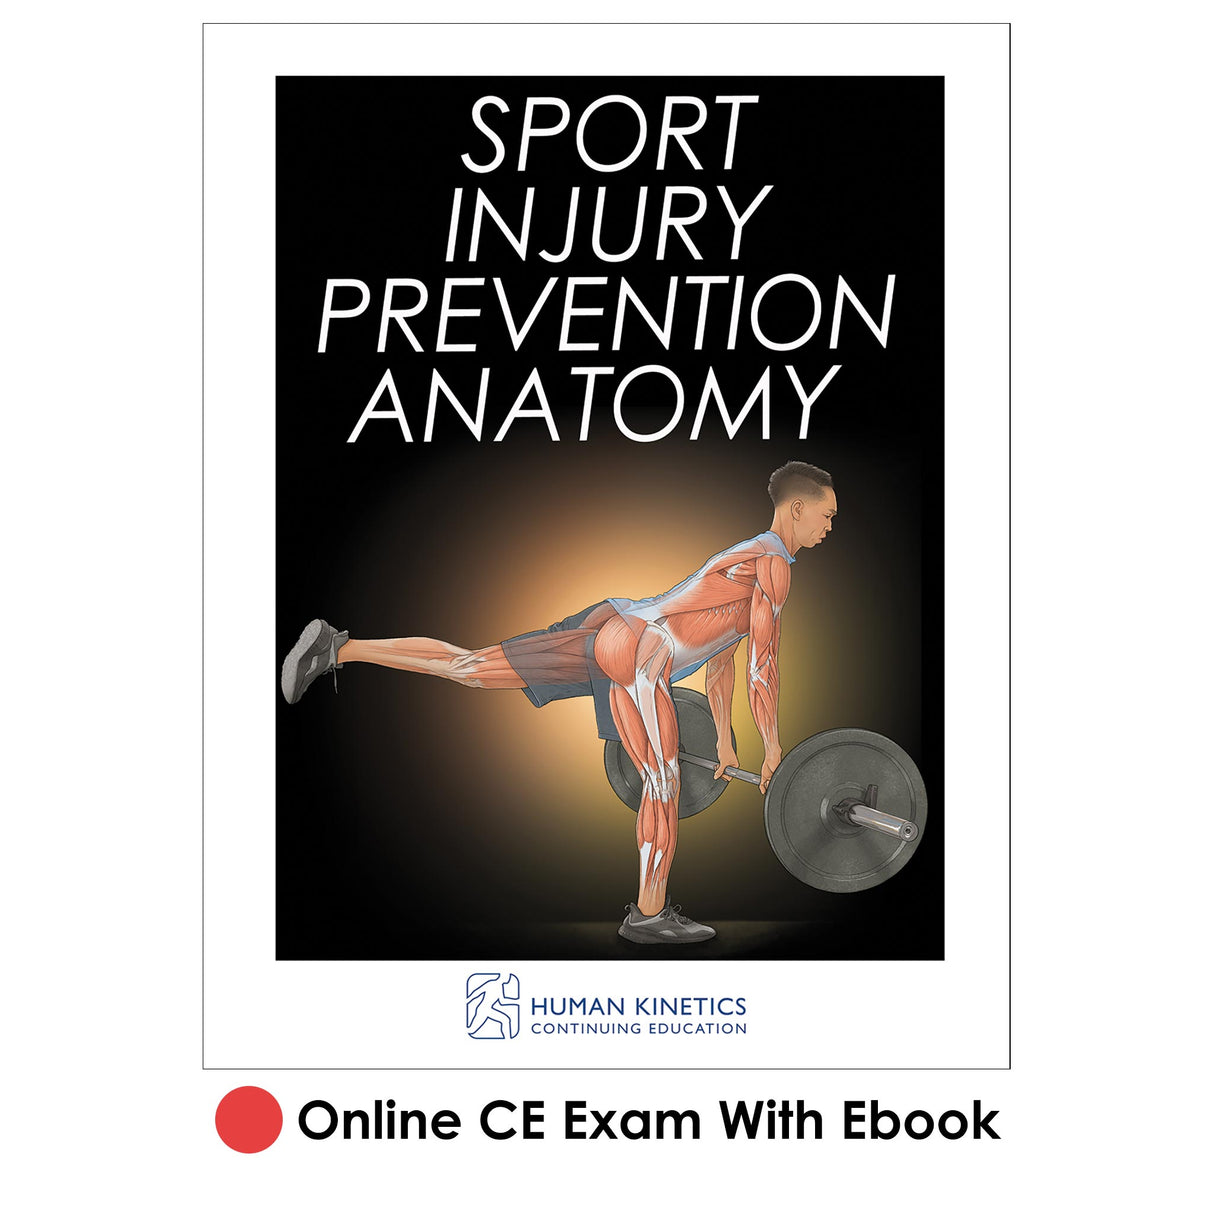 Sport Injury Prevention Anatomy Online CE Exam With Ebook